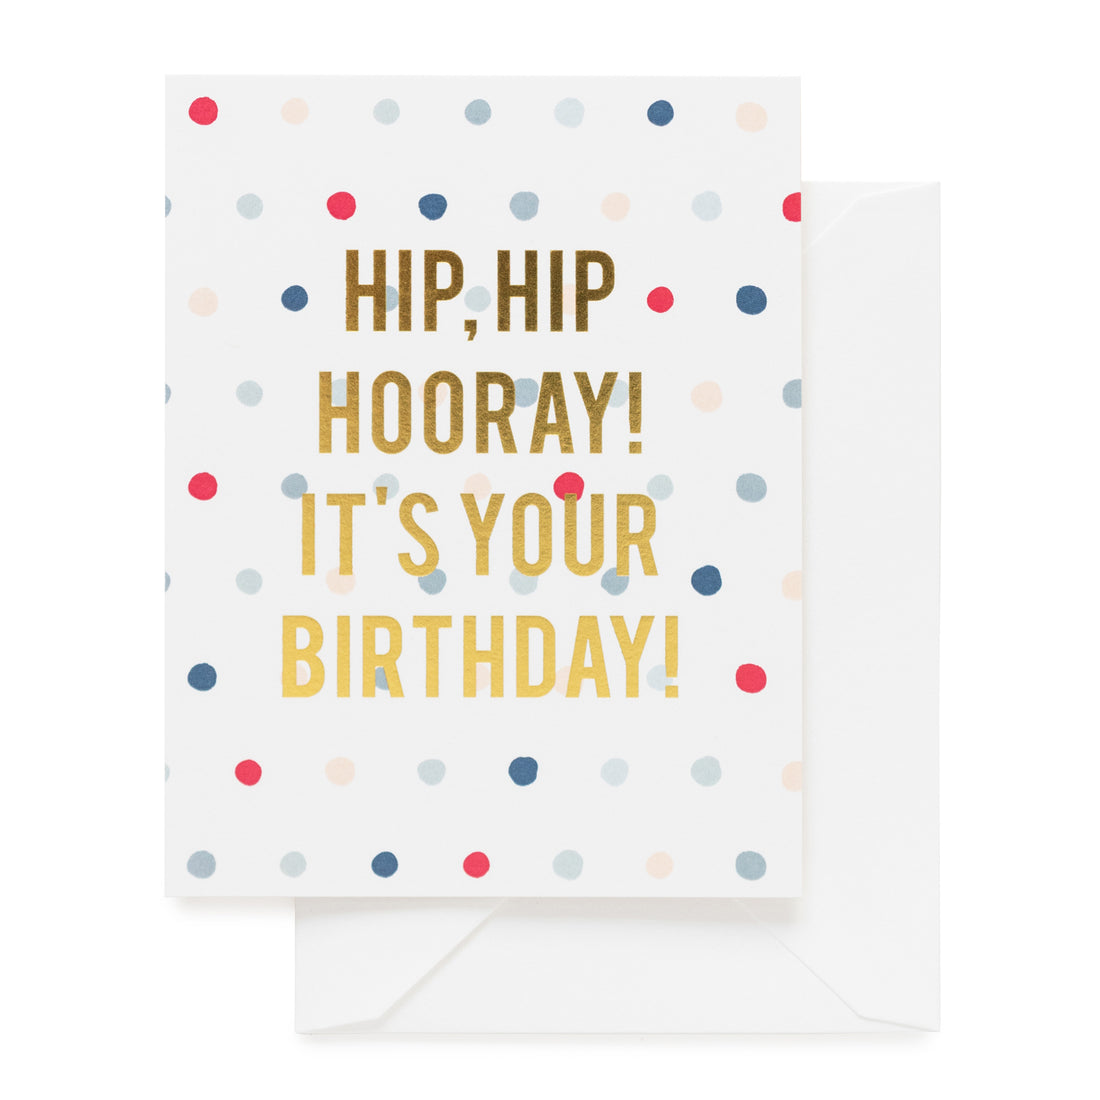 hip hip hooray! it's your birthday! card